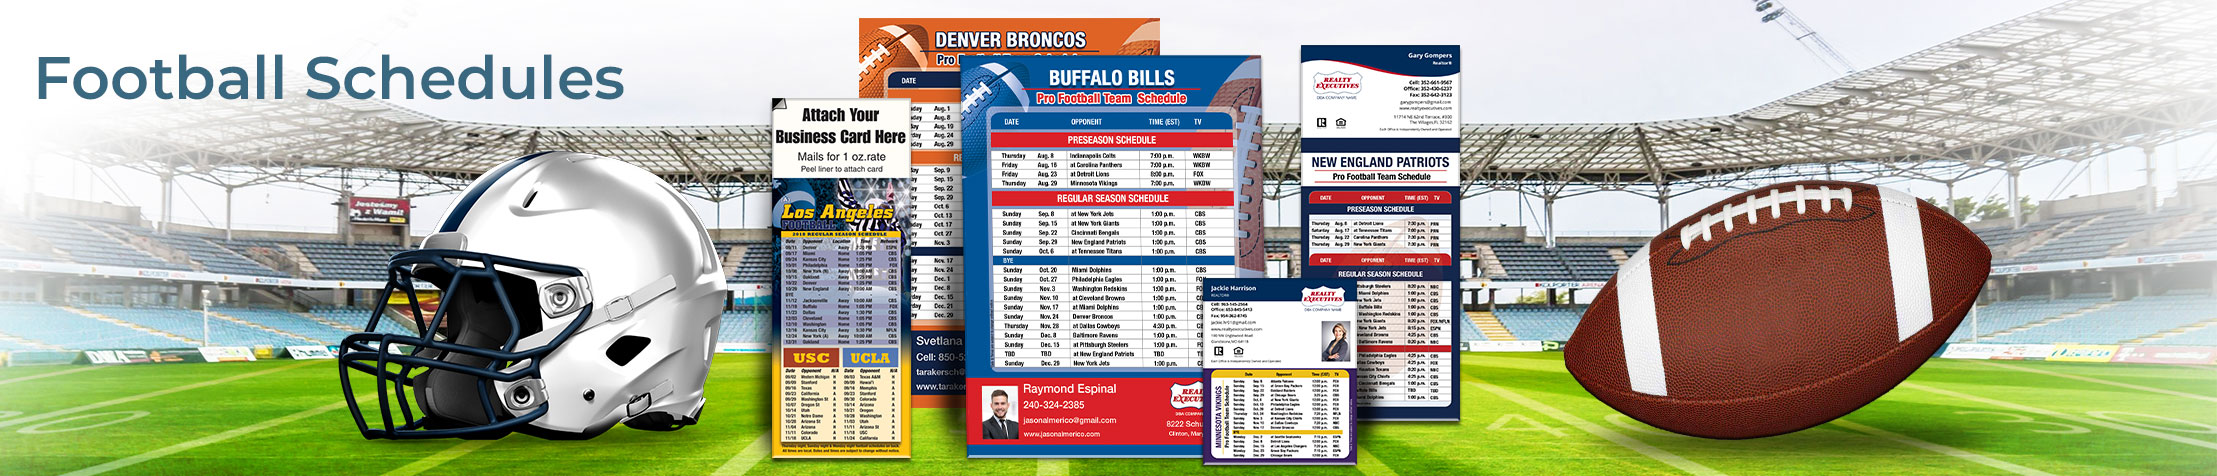 Realty Executives Real Estate Football Schedules - REI personalized football schedules | BestPrintBuy.com